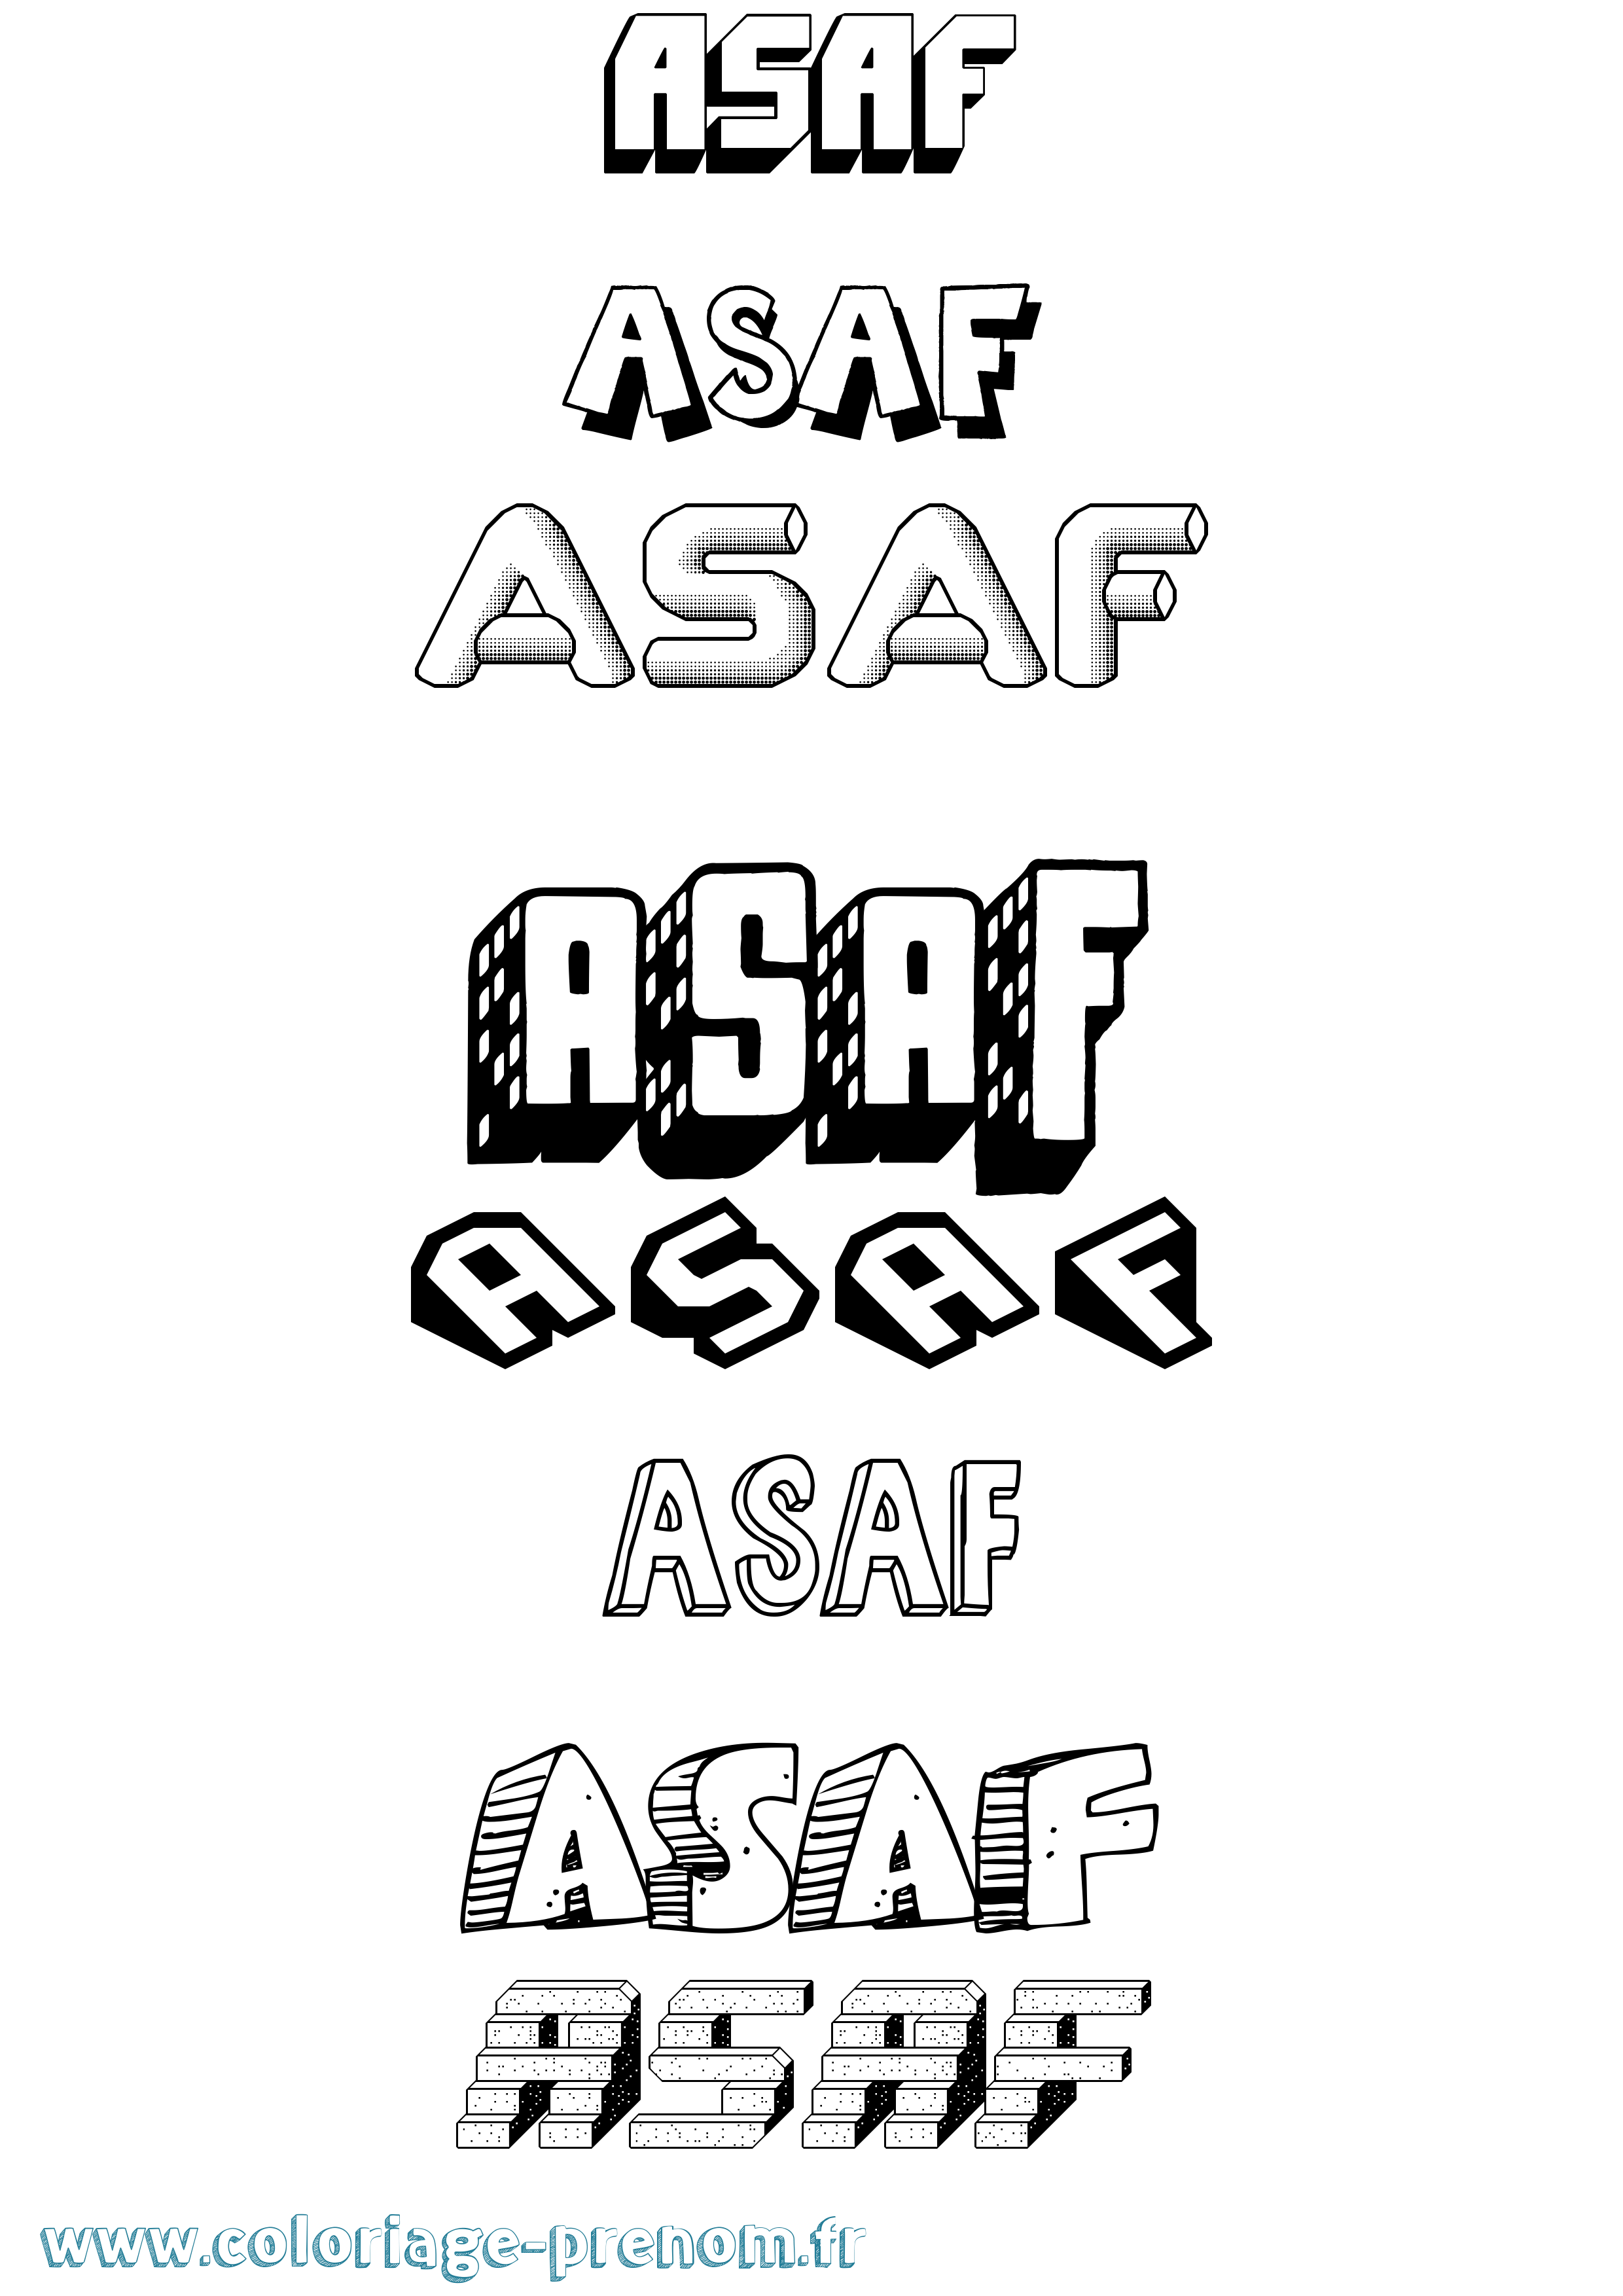 Coloriage prénom Asaf Effet 3D